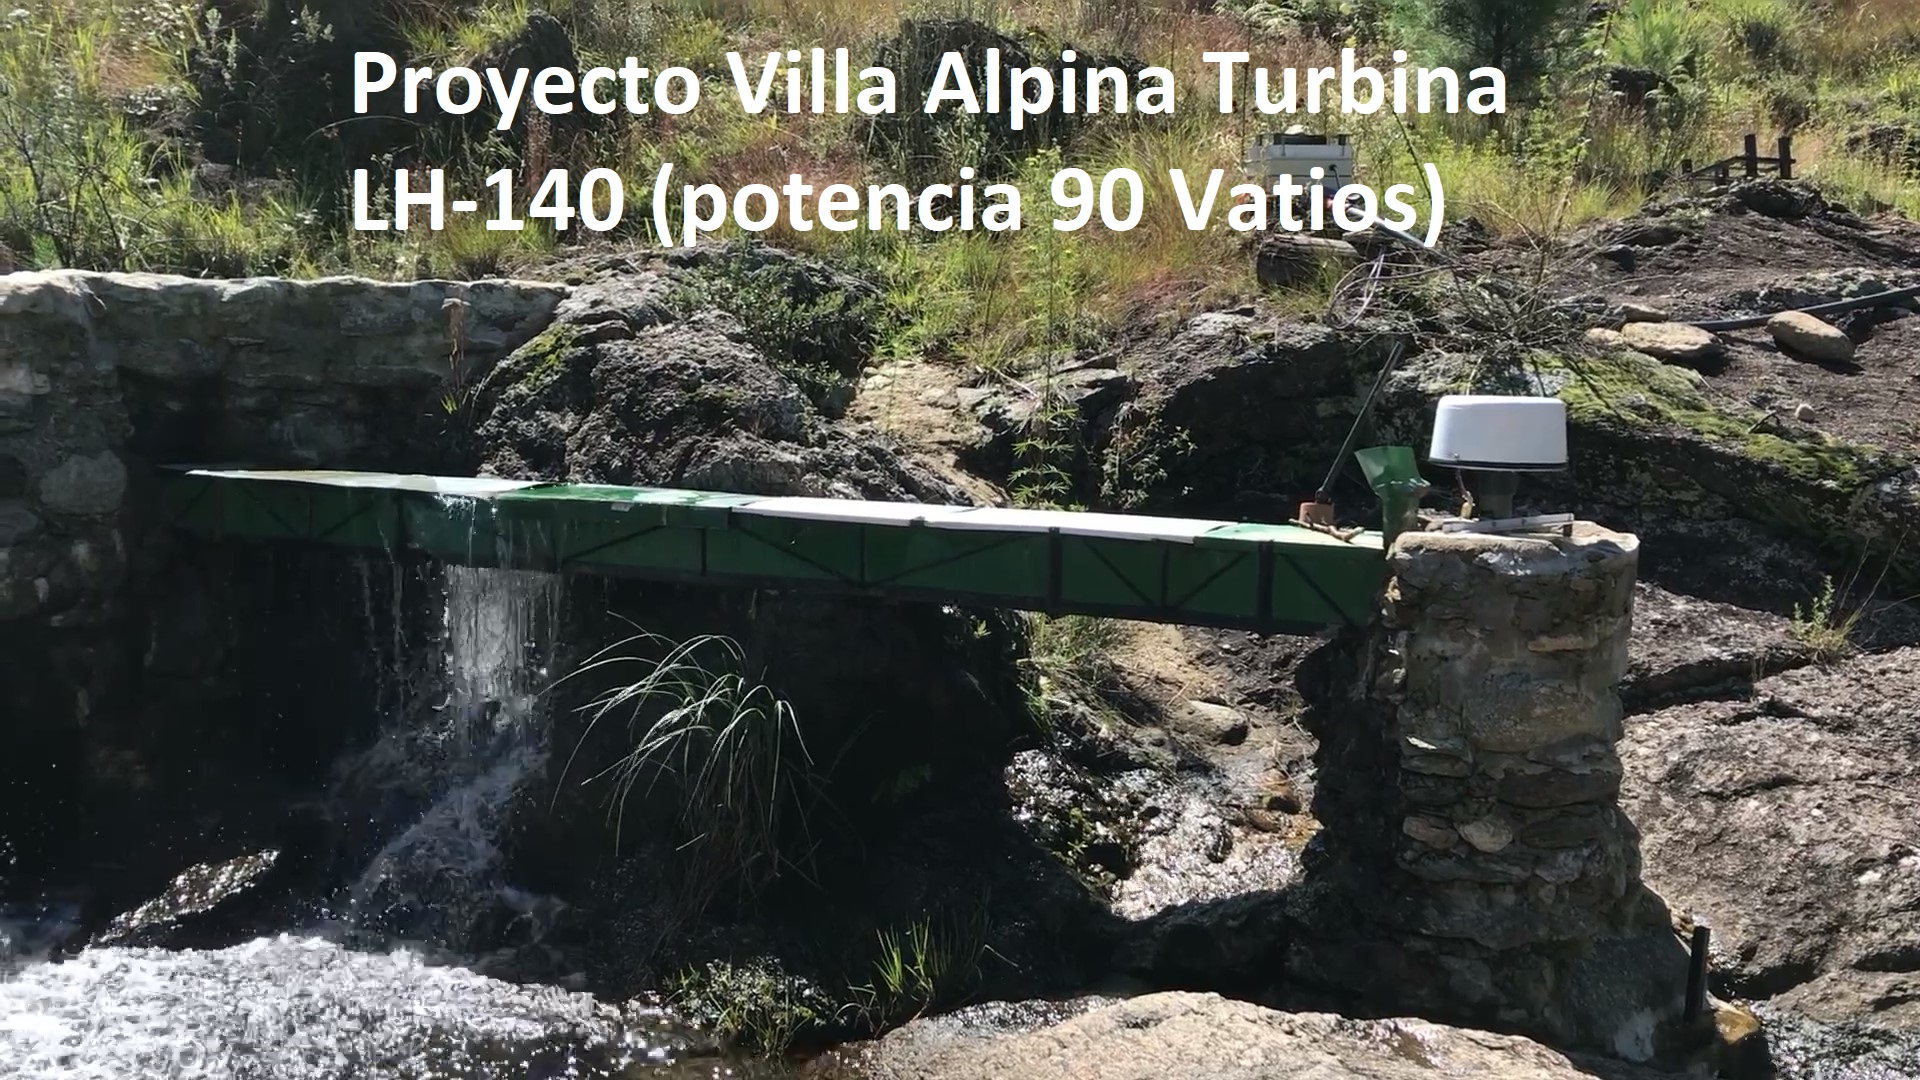 231-project-villa-alpina-cp-met-tekst-16240543881625.jpg